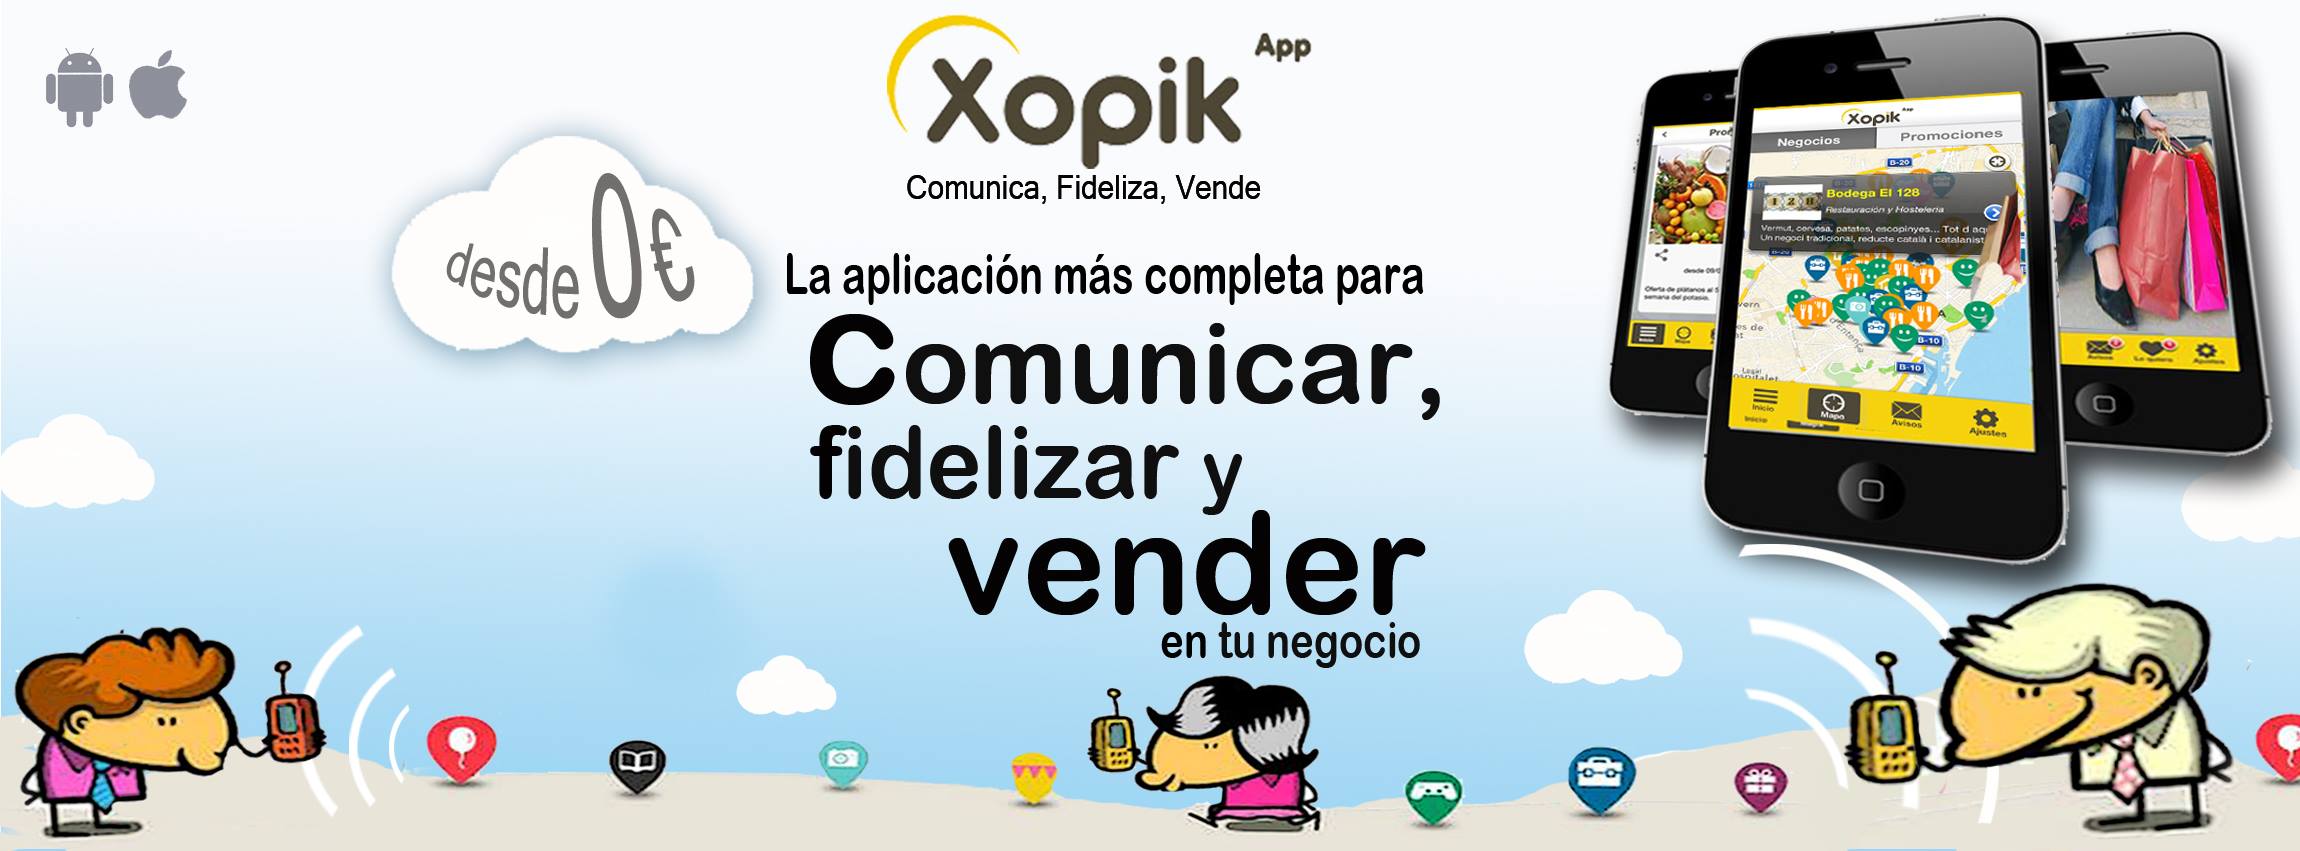 Emprendedores españoles nos ayudan a crear campañas de mobile marketing en un minuto